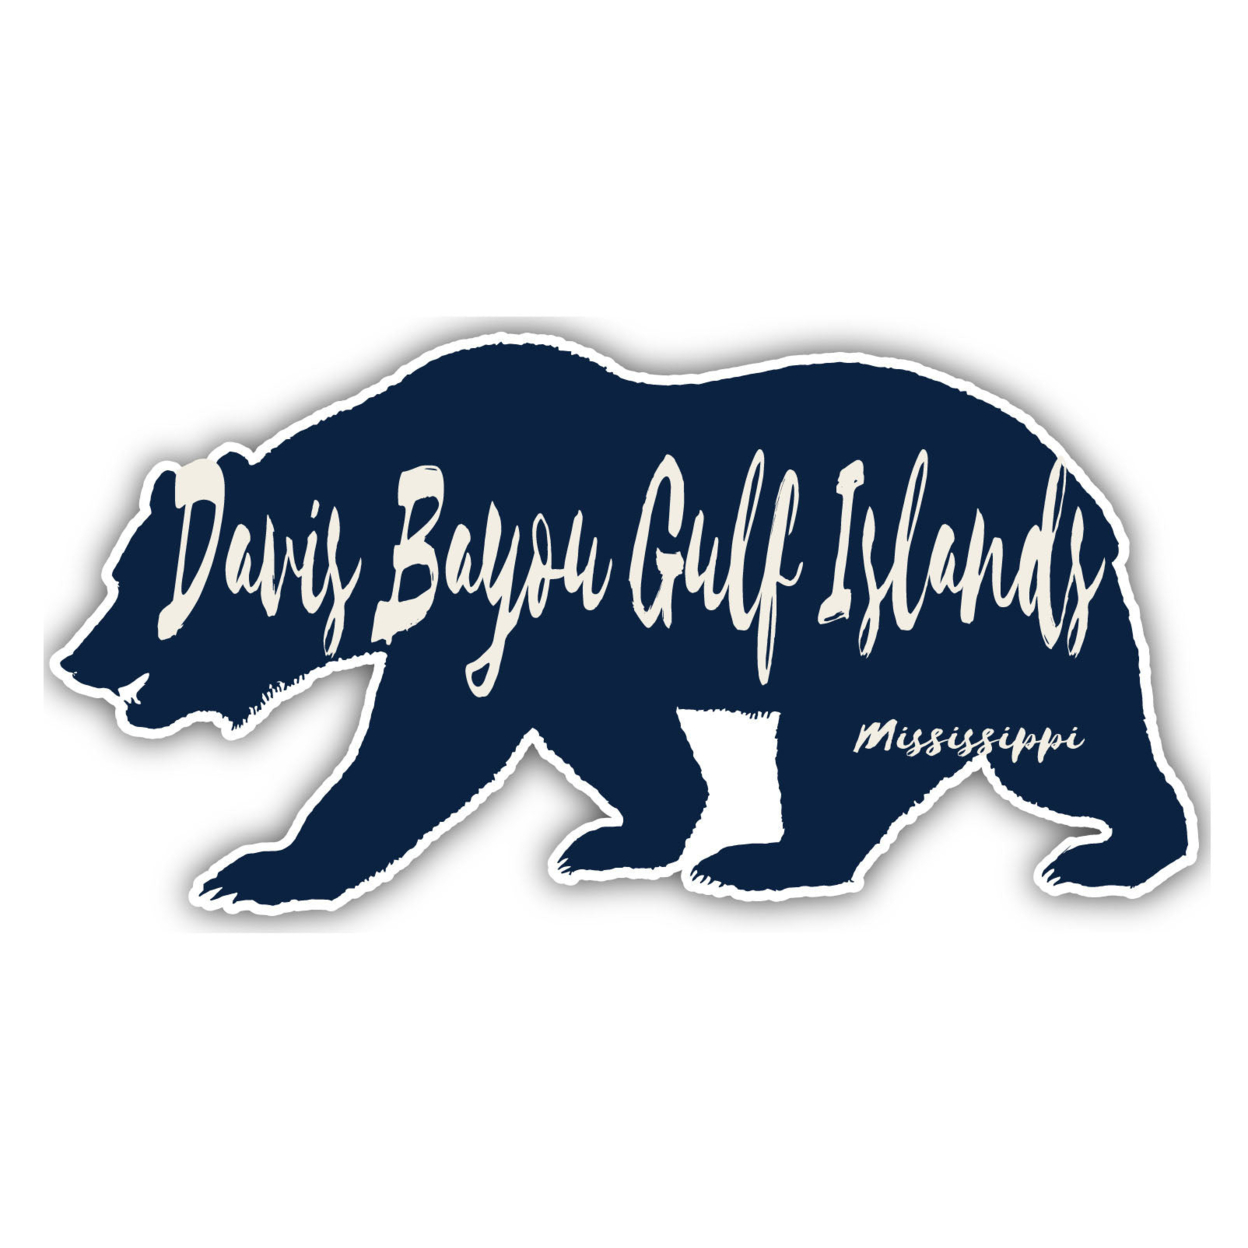 Davis Bayou Gulf Islands Mississippi Souvenir Decorative Stickers (Choose Theme And Size) - Single Unit, 2-Inch, Bear